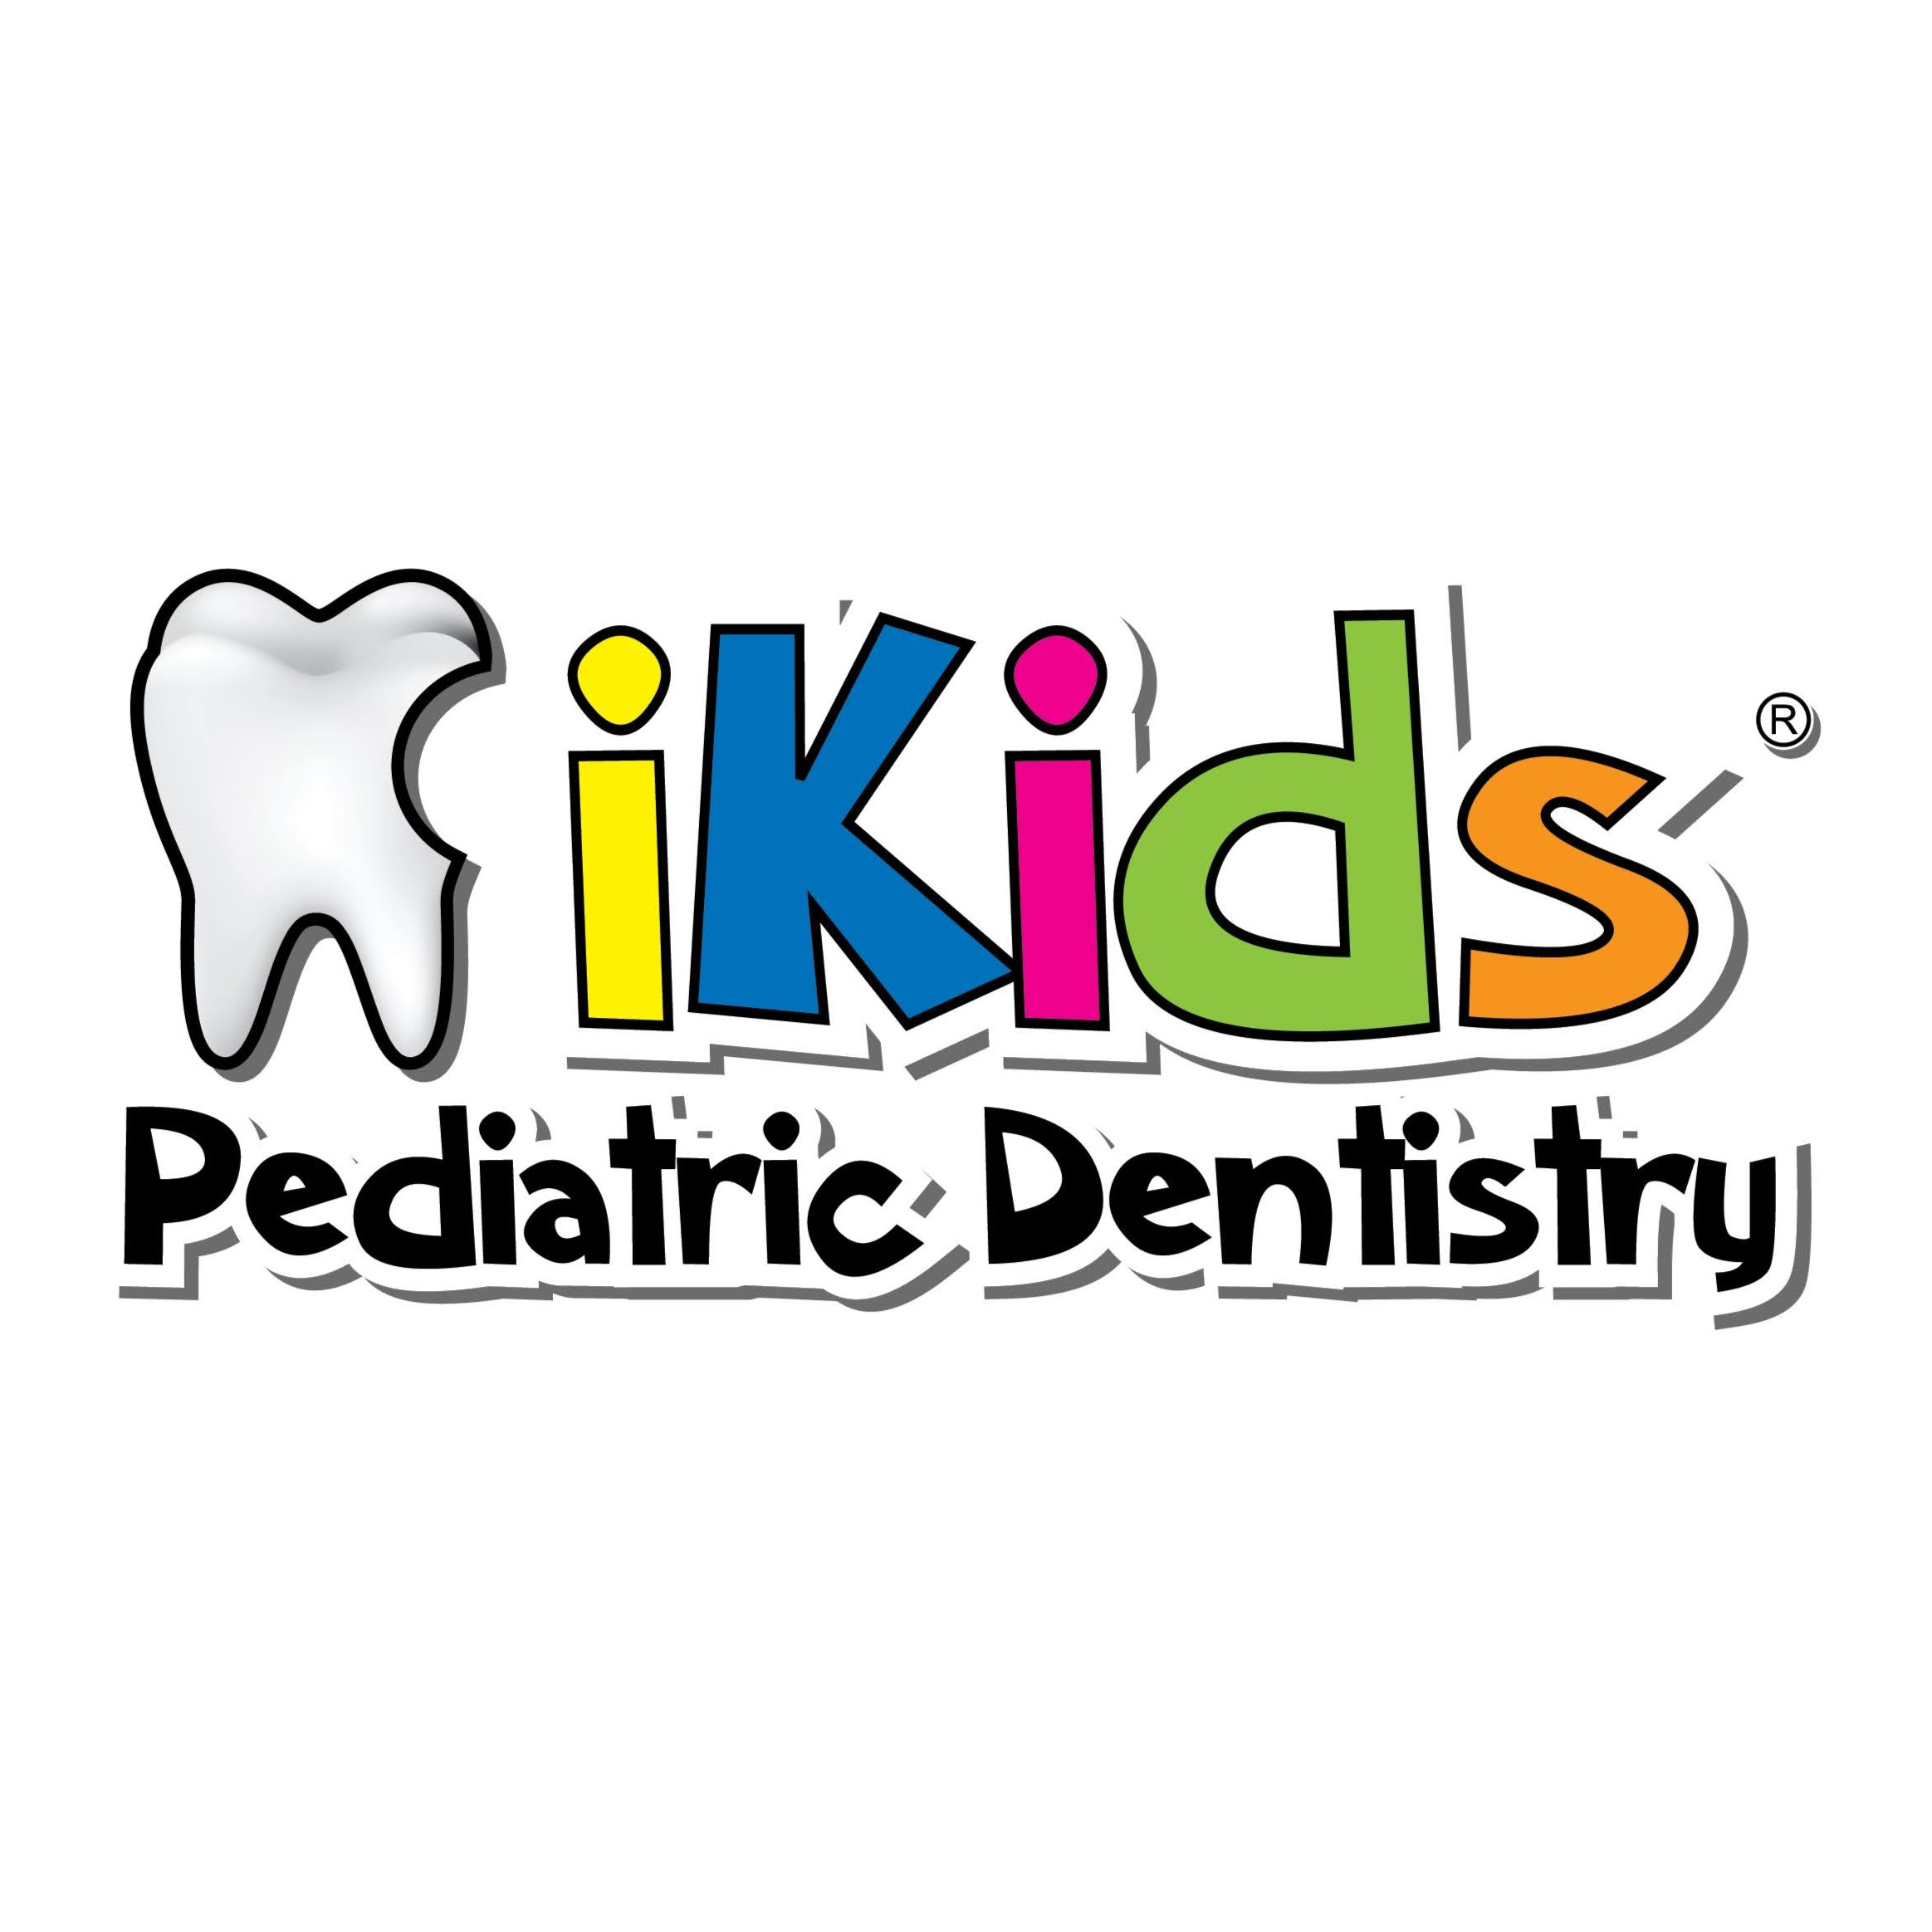 iKids Pediatric Dentistry Ennis